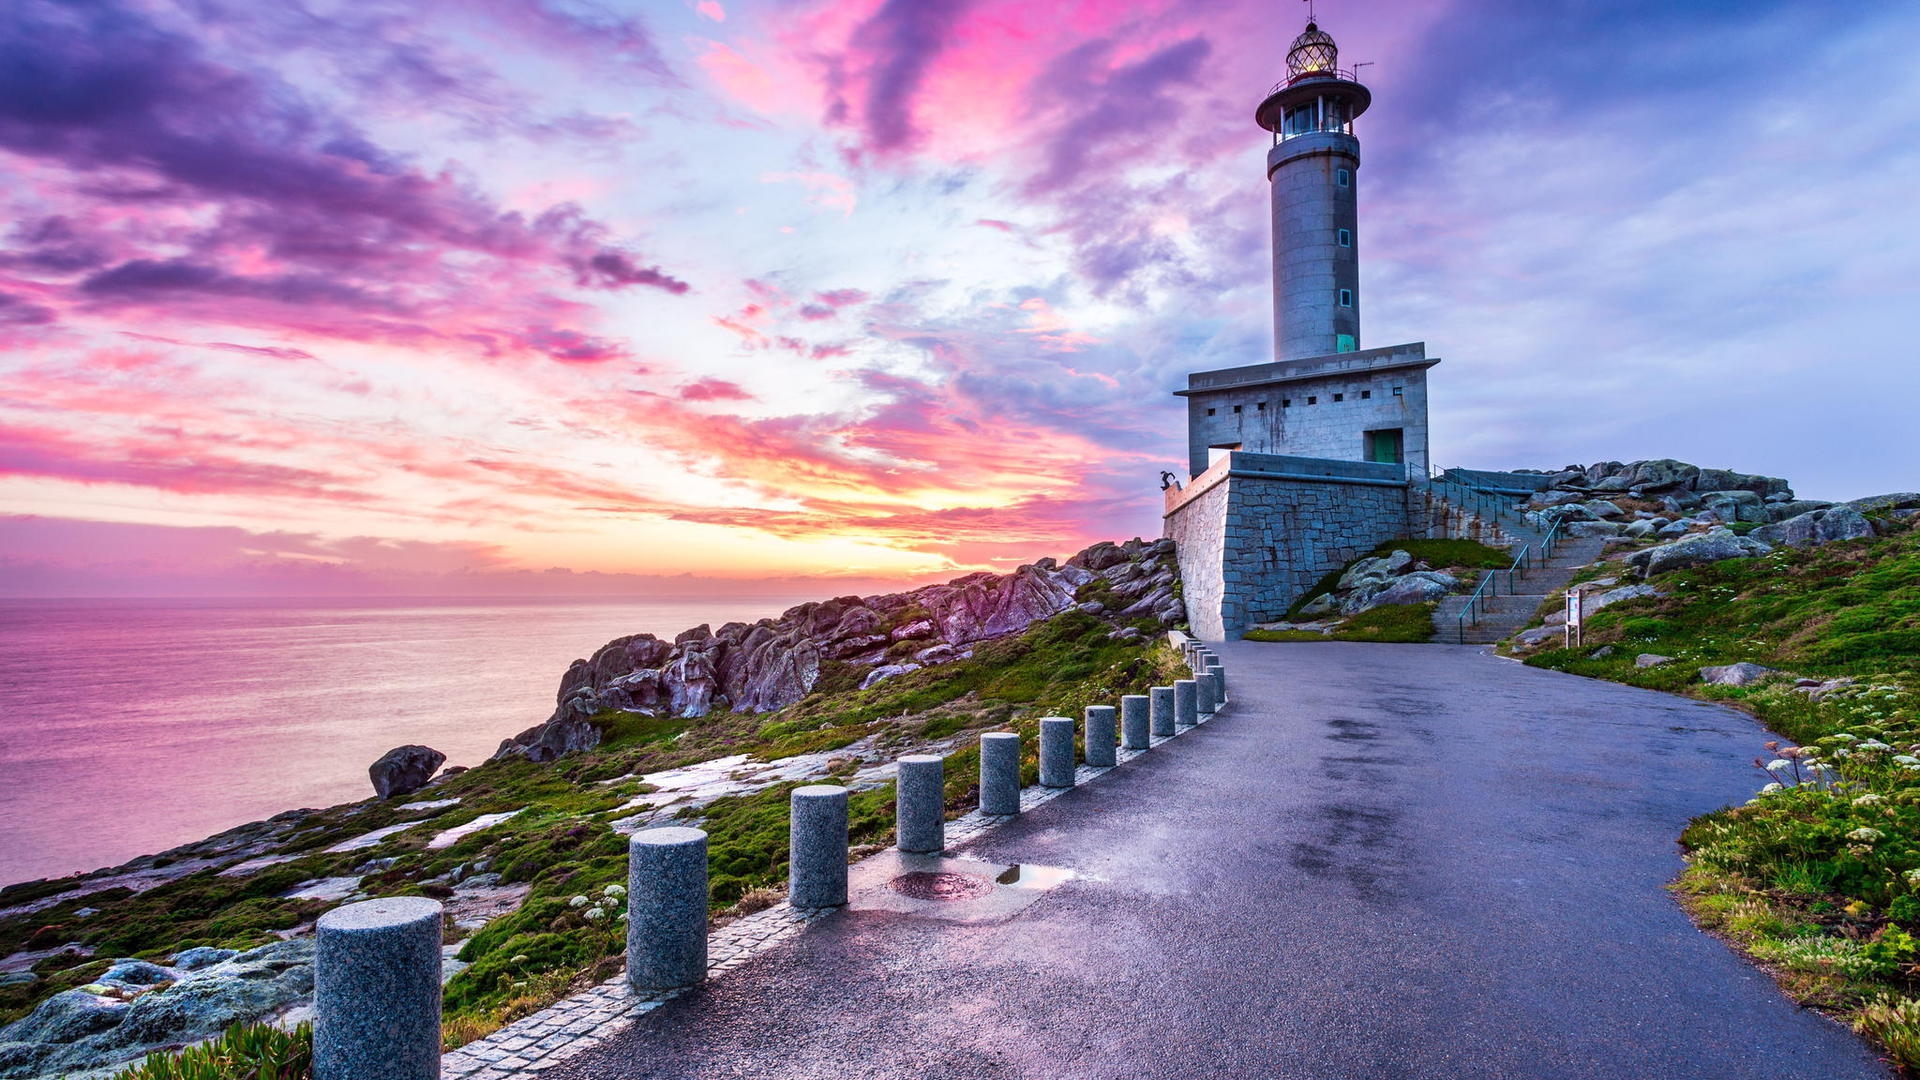 Punta Nariga Spain Lighthouse for 1920 x 1080 HDTV 1080p resolution